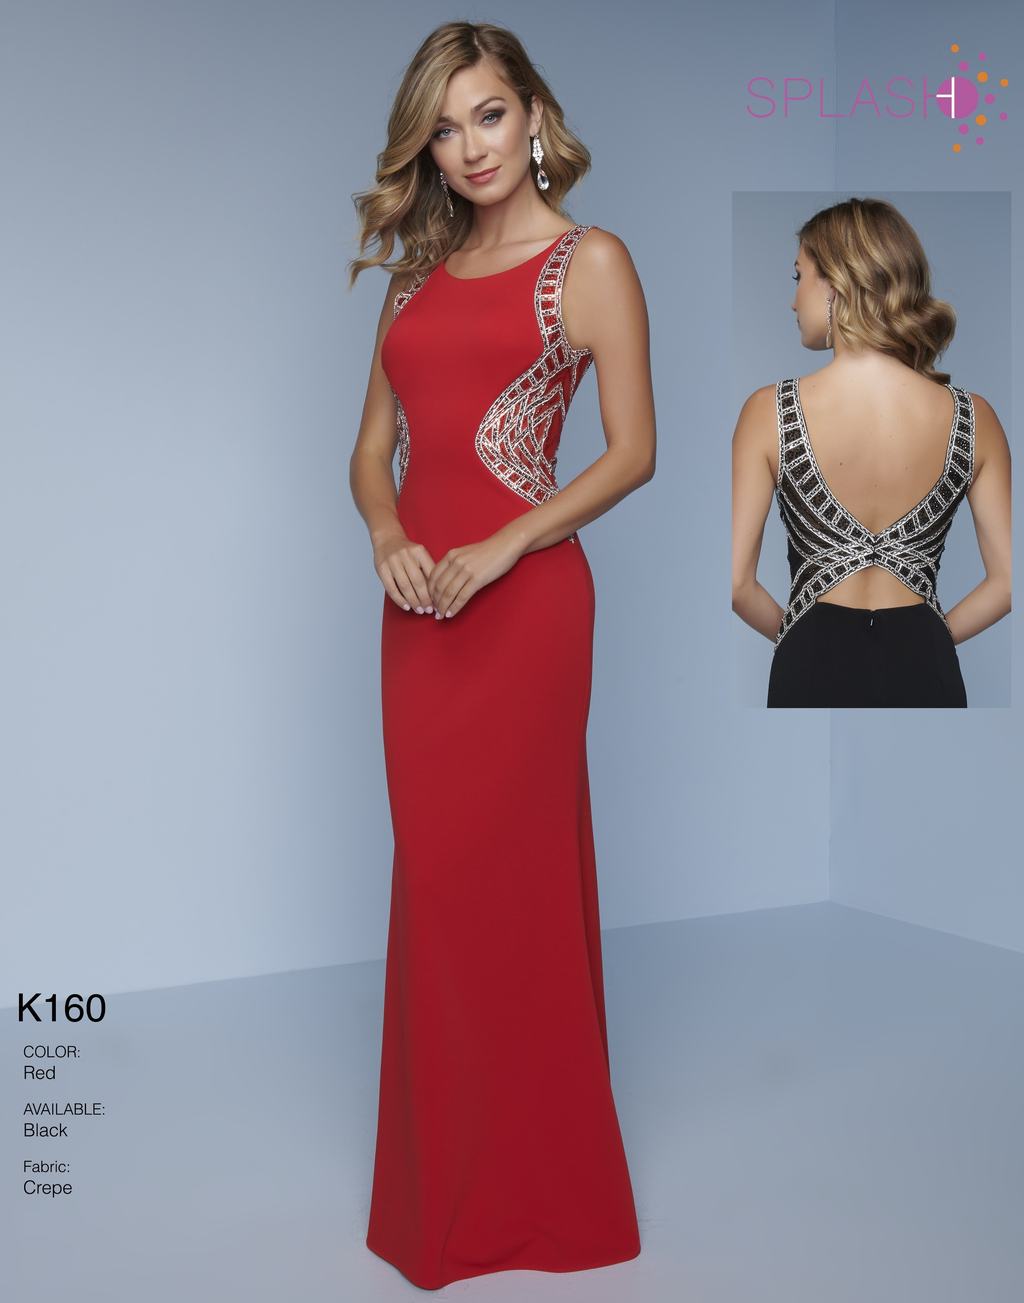 Splash Prom Cut Out Jersey Dress K160 Red